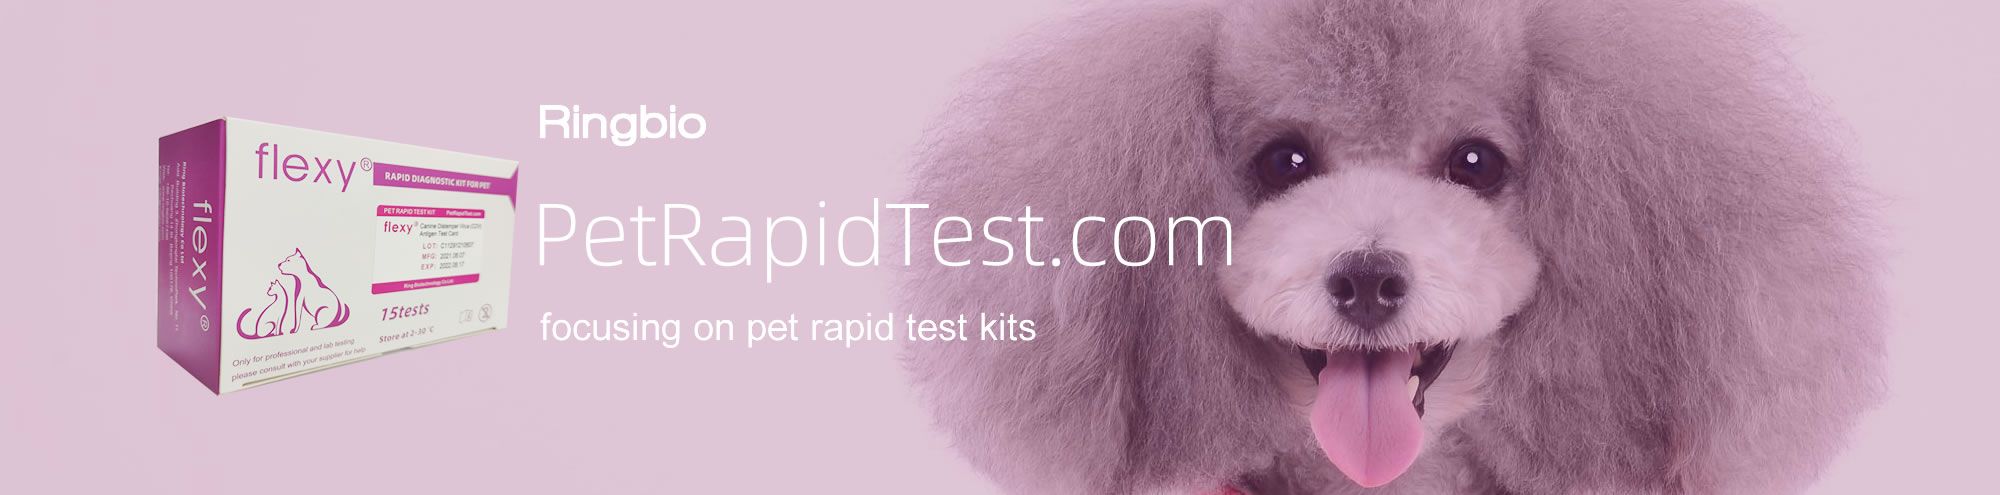 Ringbio launches petrapidtest.com for Flexy Pet Rapid Test Kits